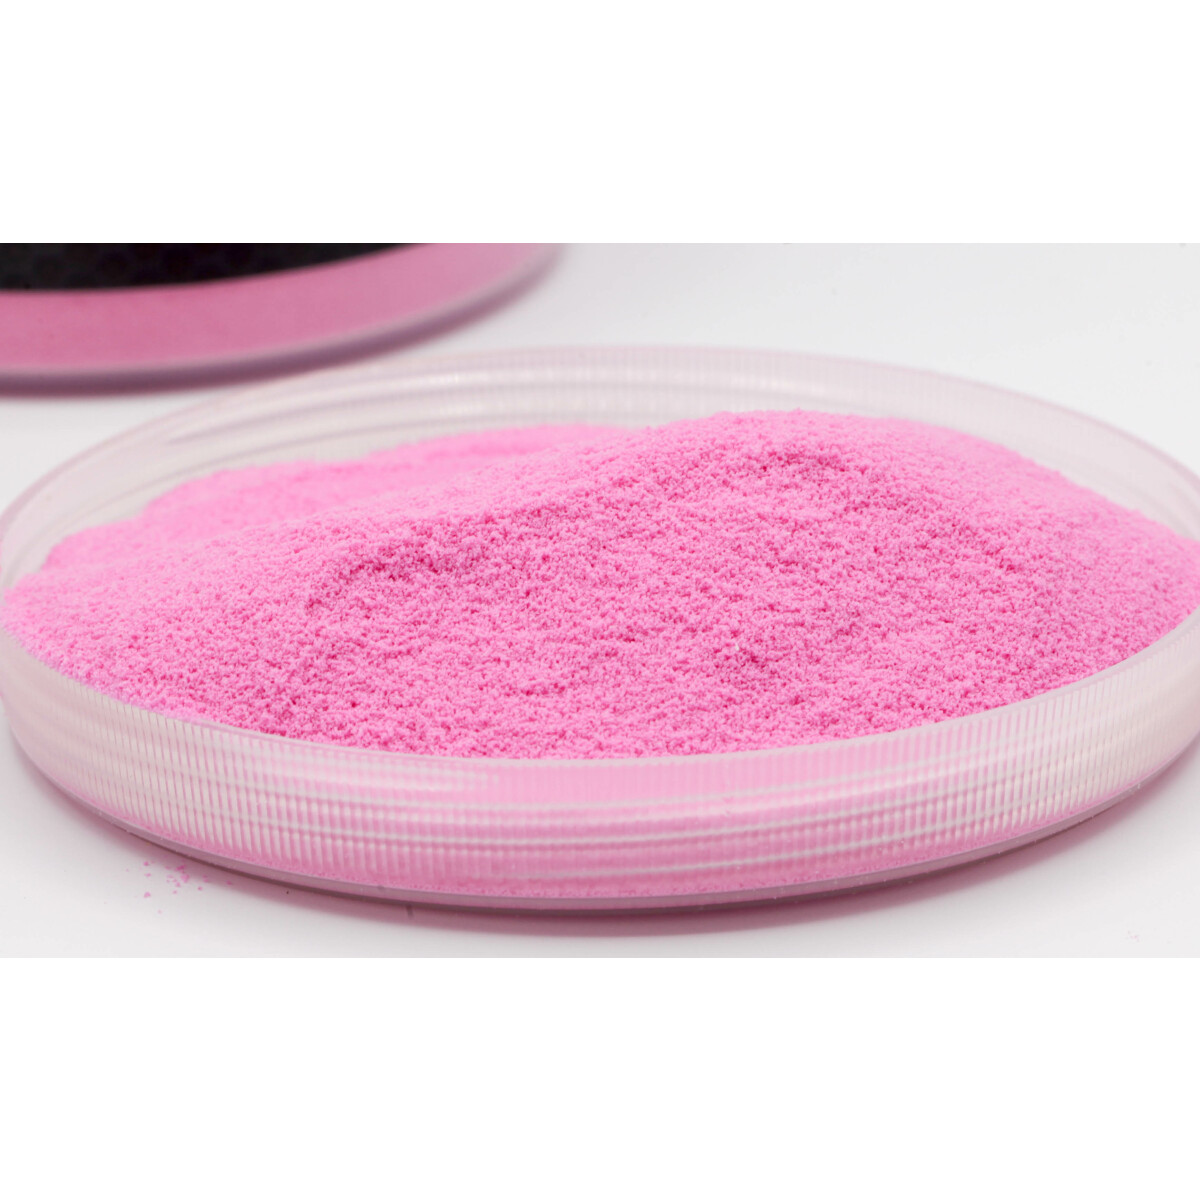 Carpleads Powder Coating - Pink 1000 g